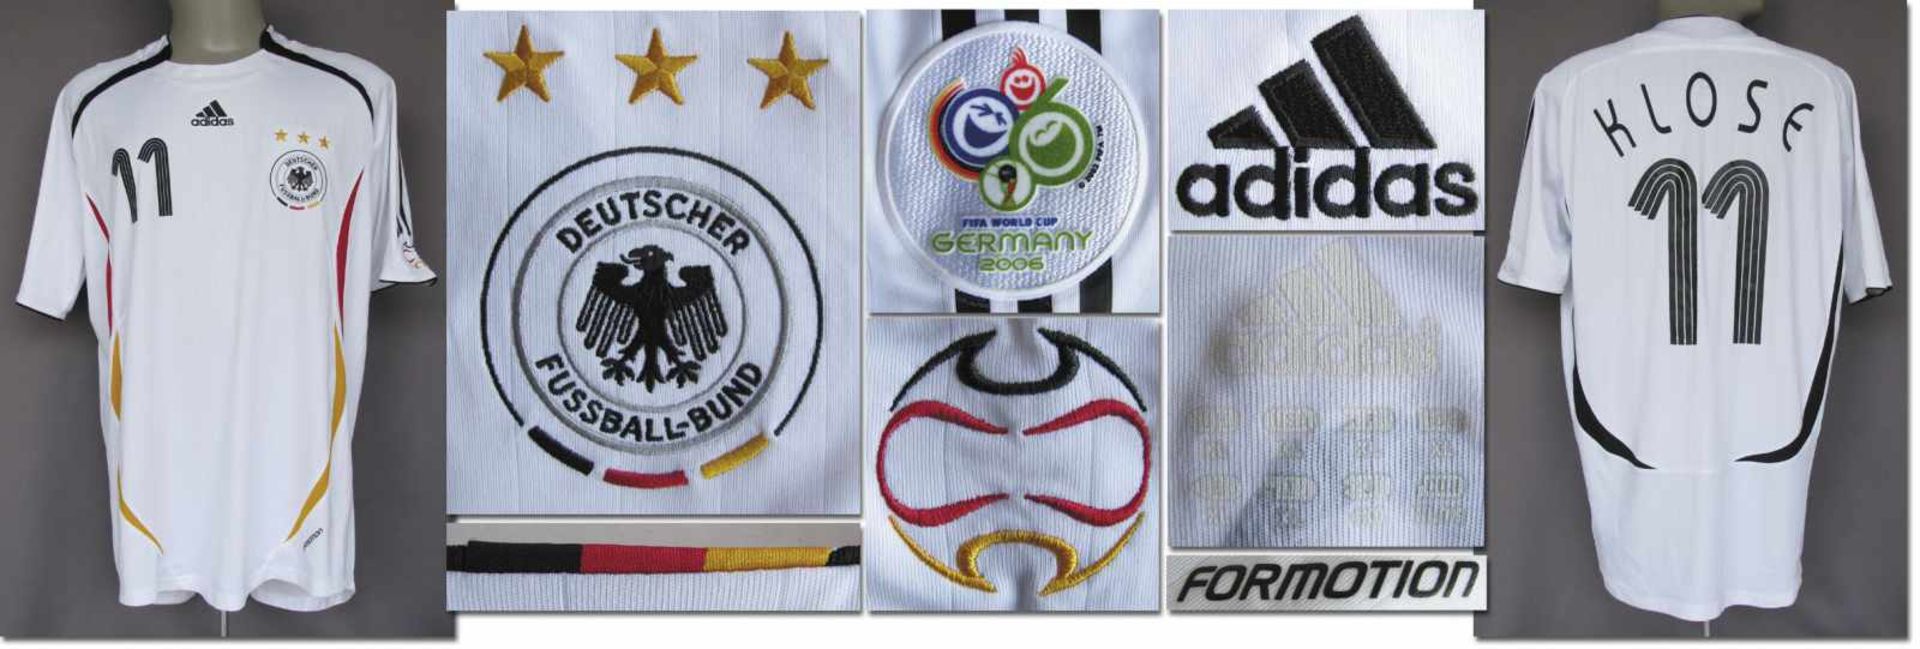 World Cup 2006 match worn football shirt Germany - Original match worn shirt Germany with number 11.